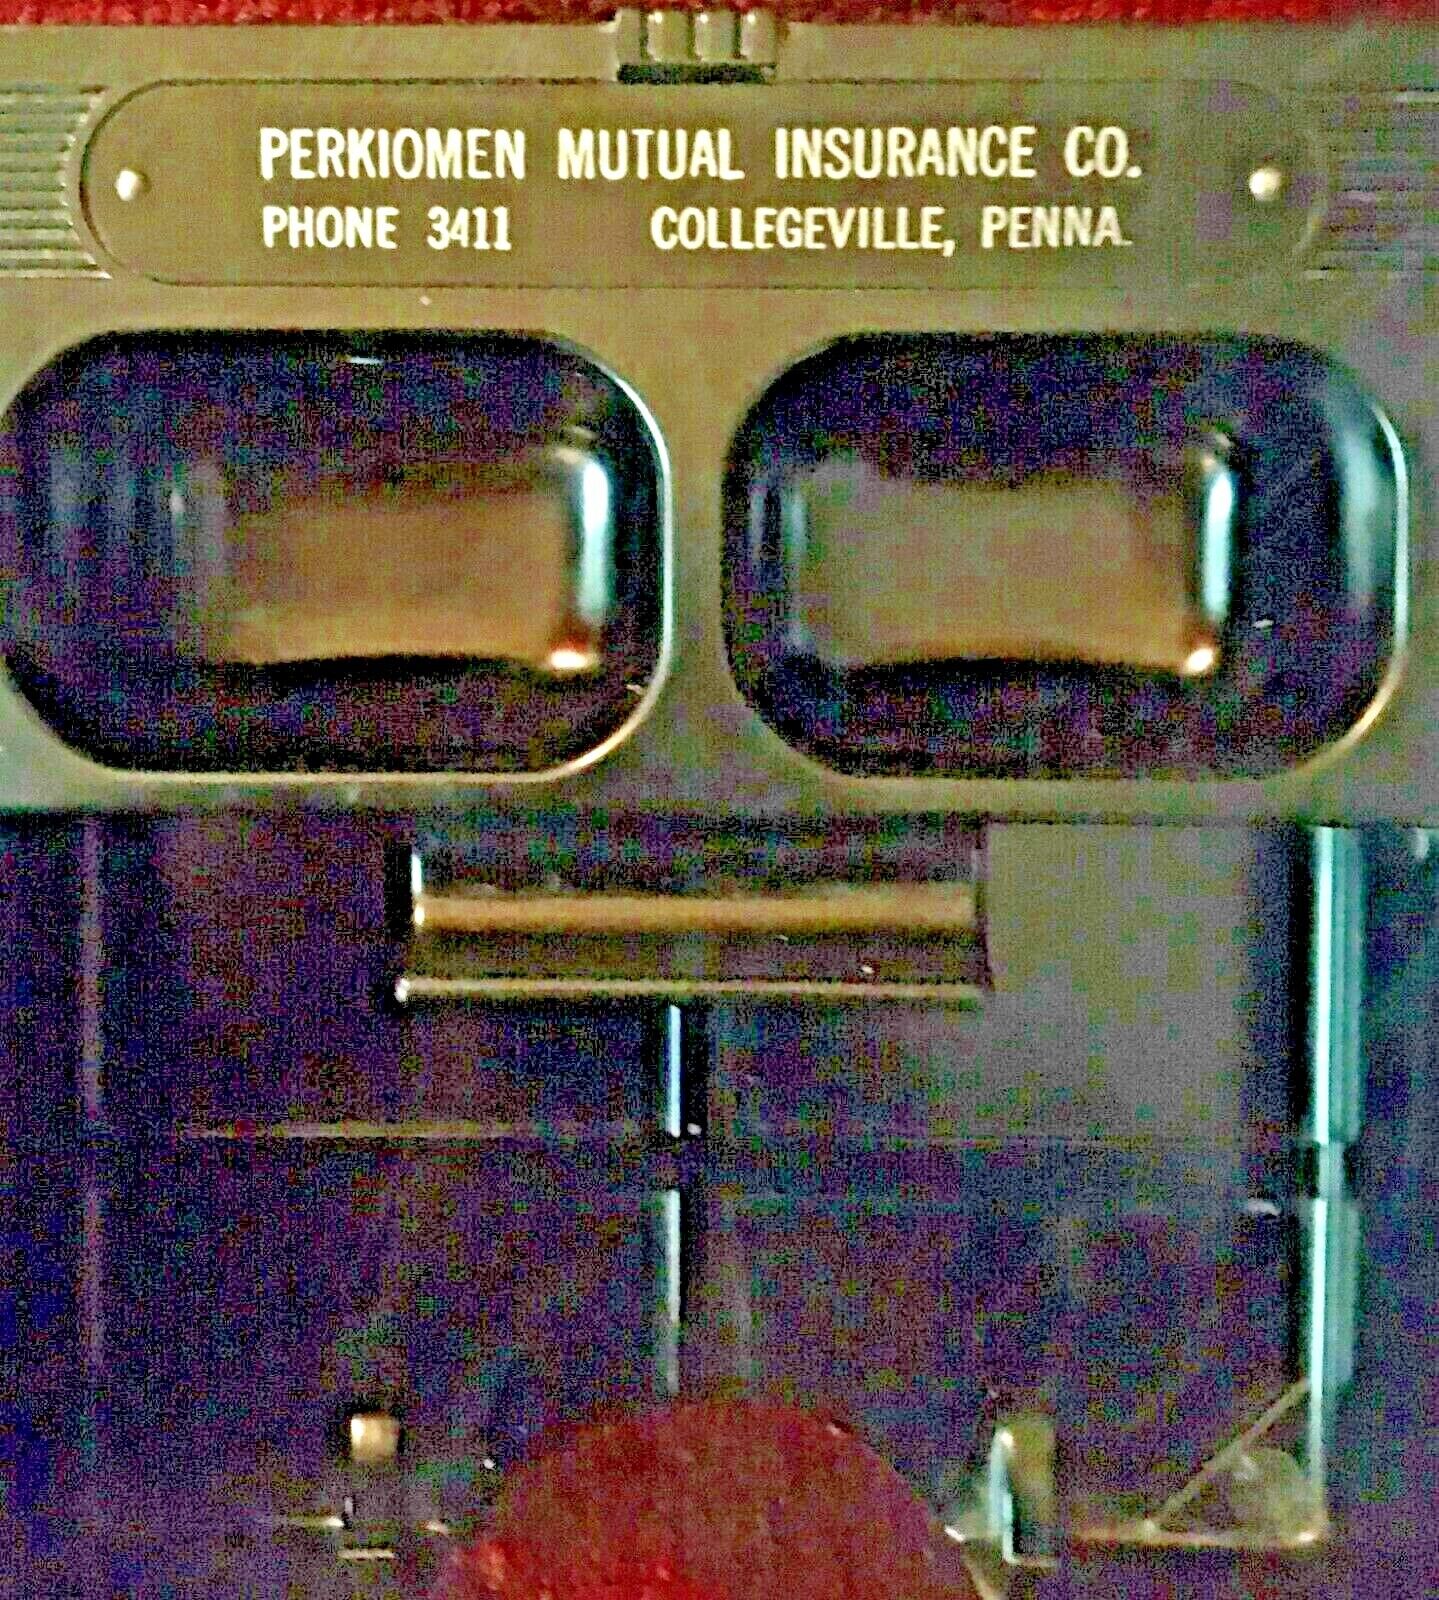 1960s Perkiomen Mutual Insurance Co. Advertising Memo Caddy - Collegeville, PA.